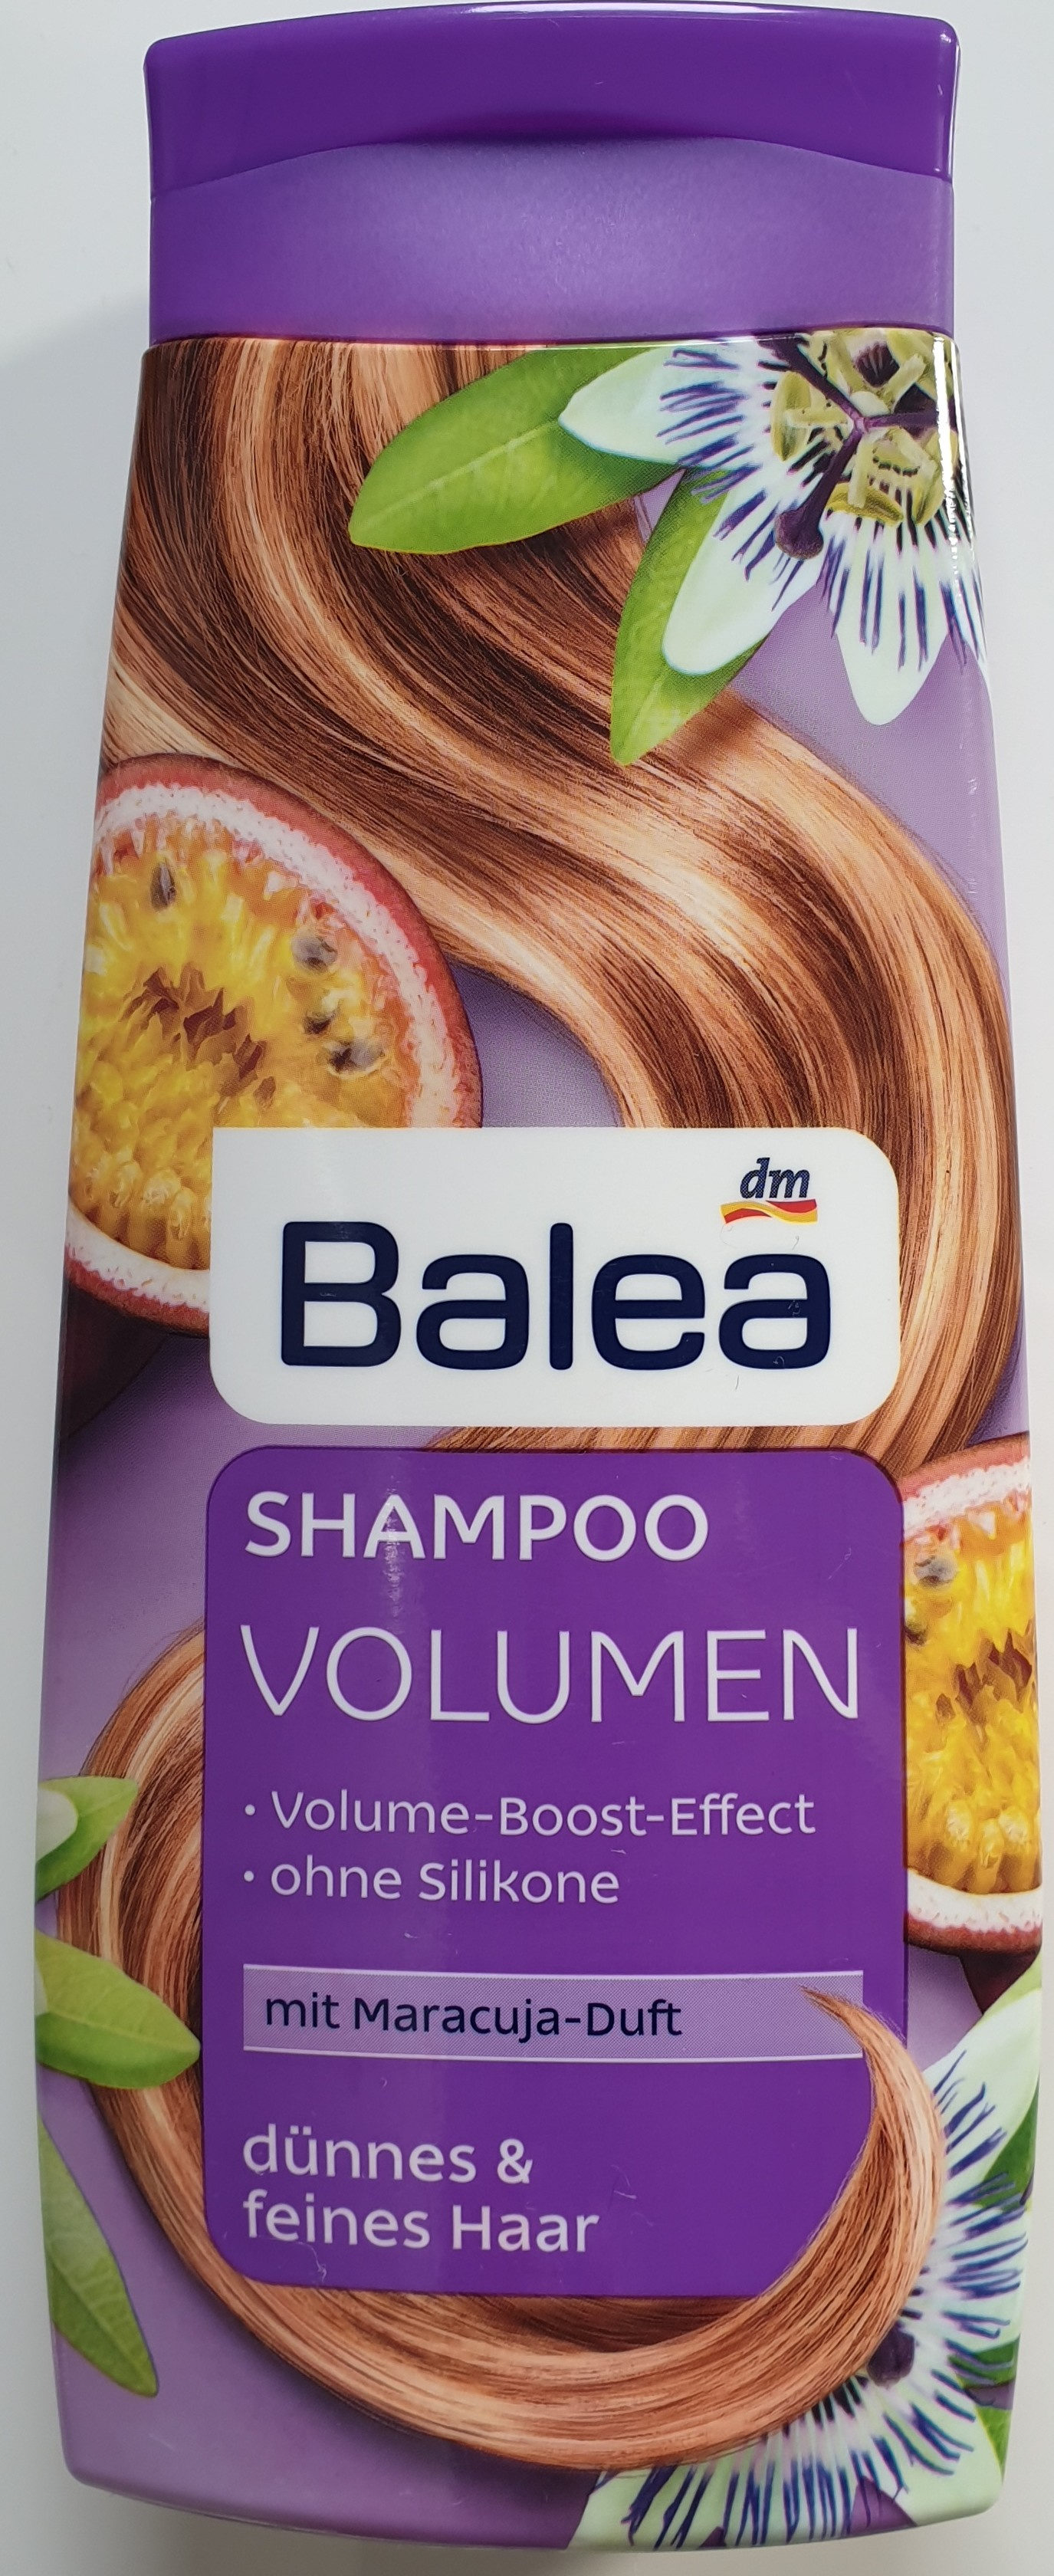 Shampoo Volumen mit Maracuja-Duft - Produit - de